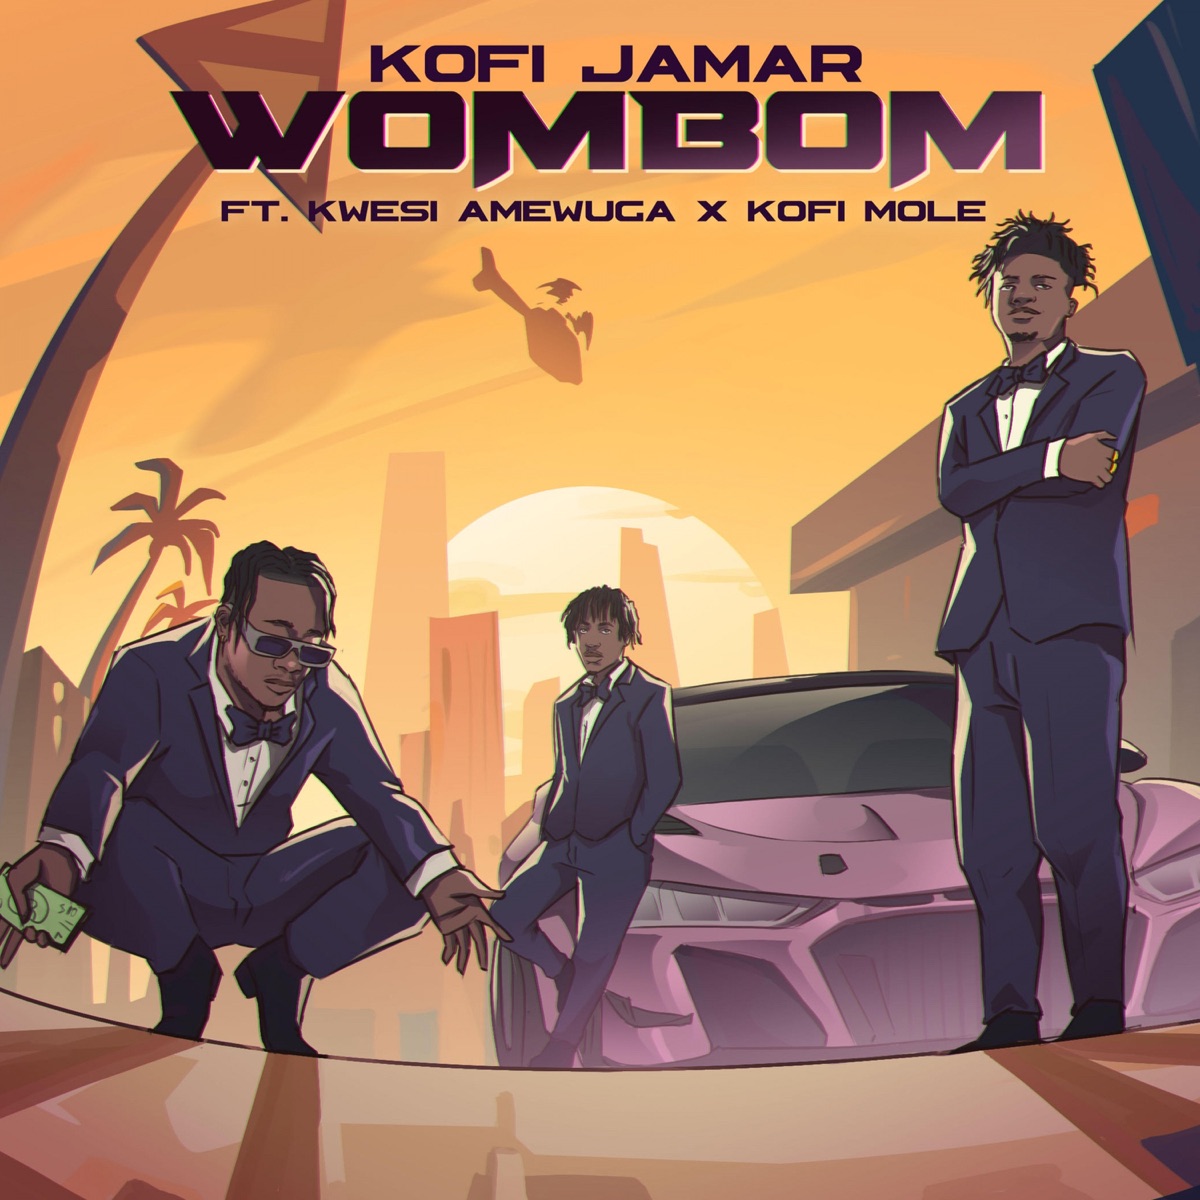 Kofi Jamar - Wombom Ft. Kwesi Amewuga X Kofi Mole